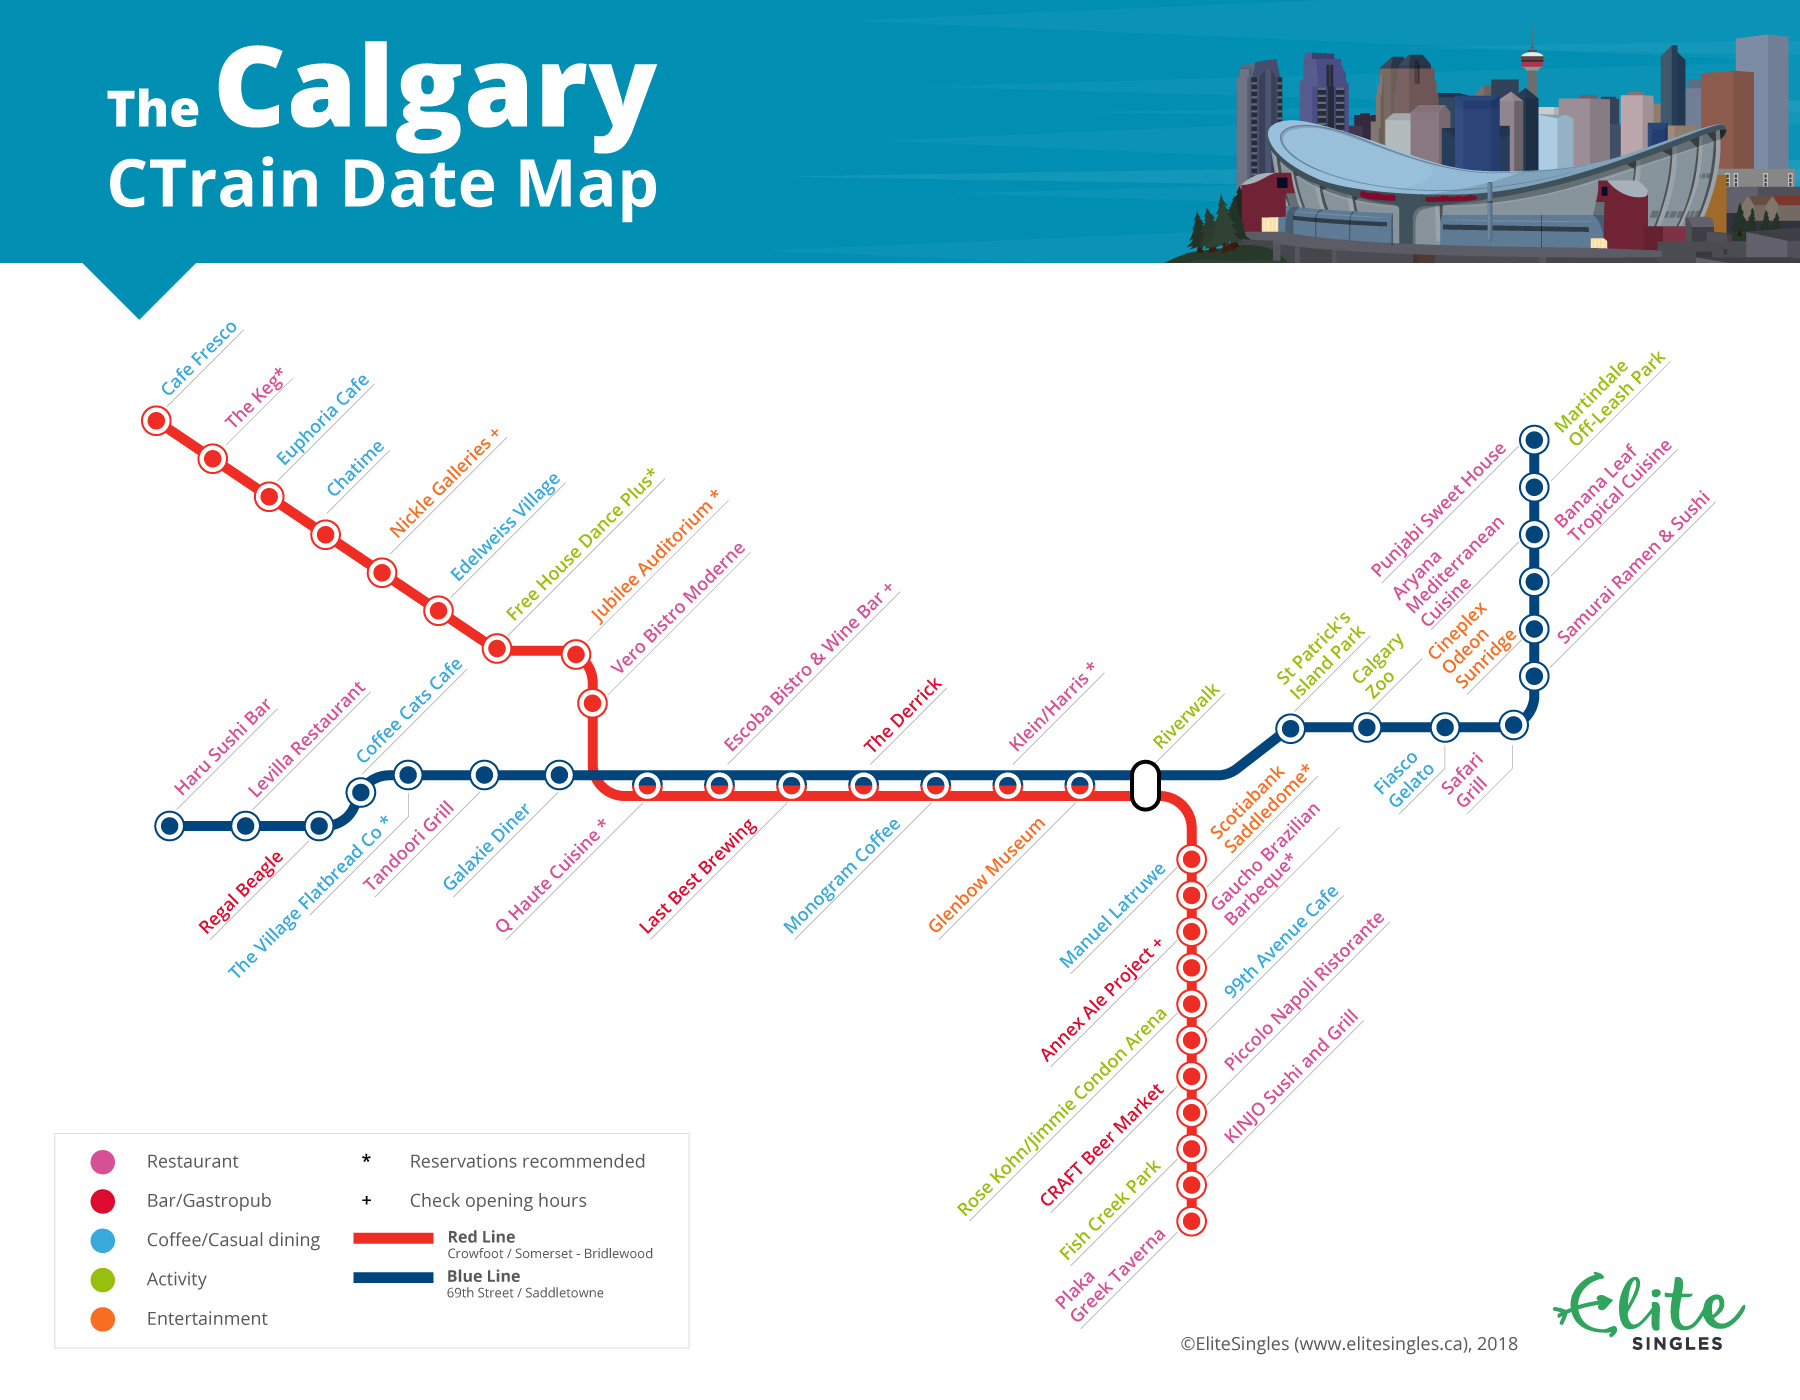 EliteSingles CTrain date map  - 45 Calgary date ideas Oct 2018